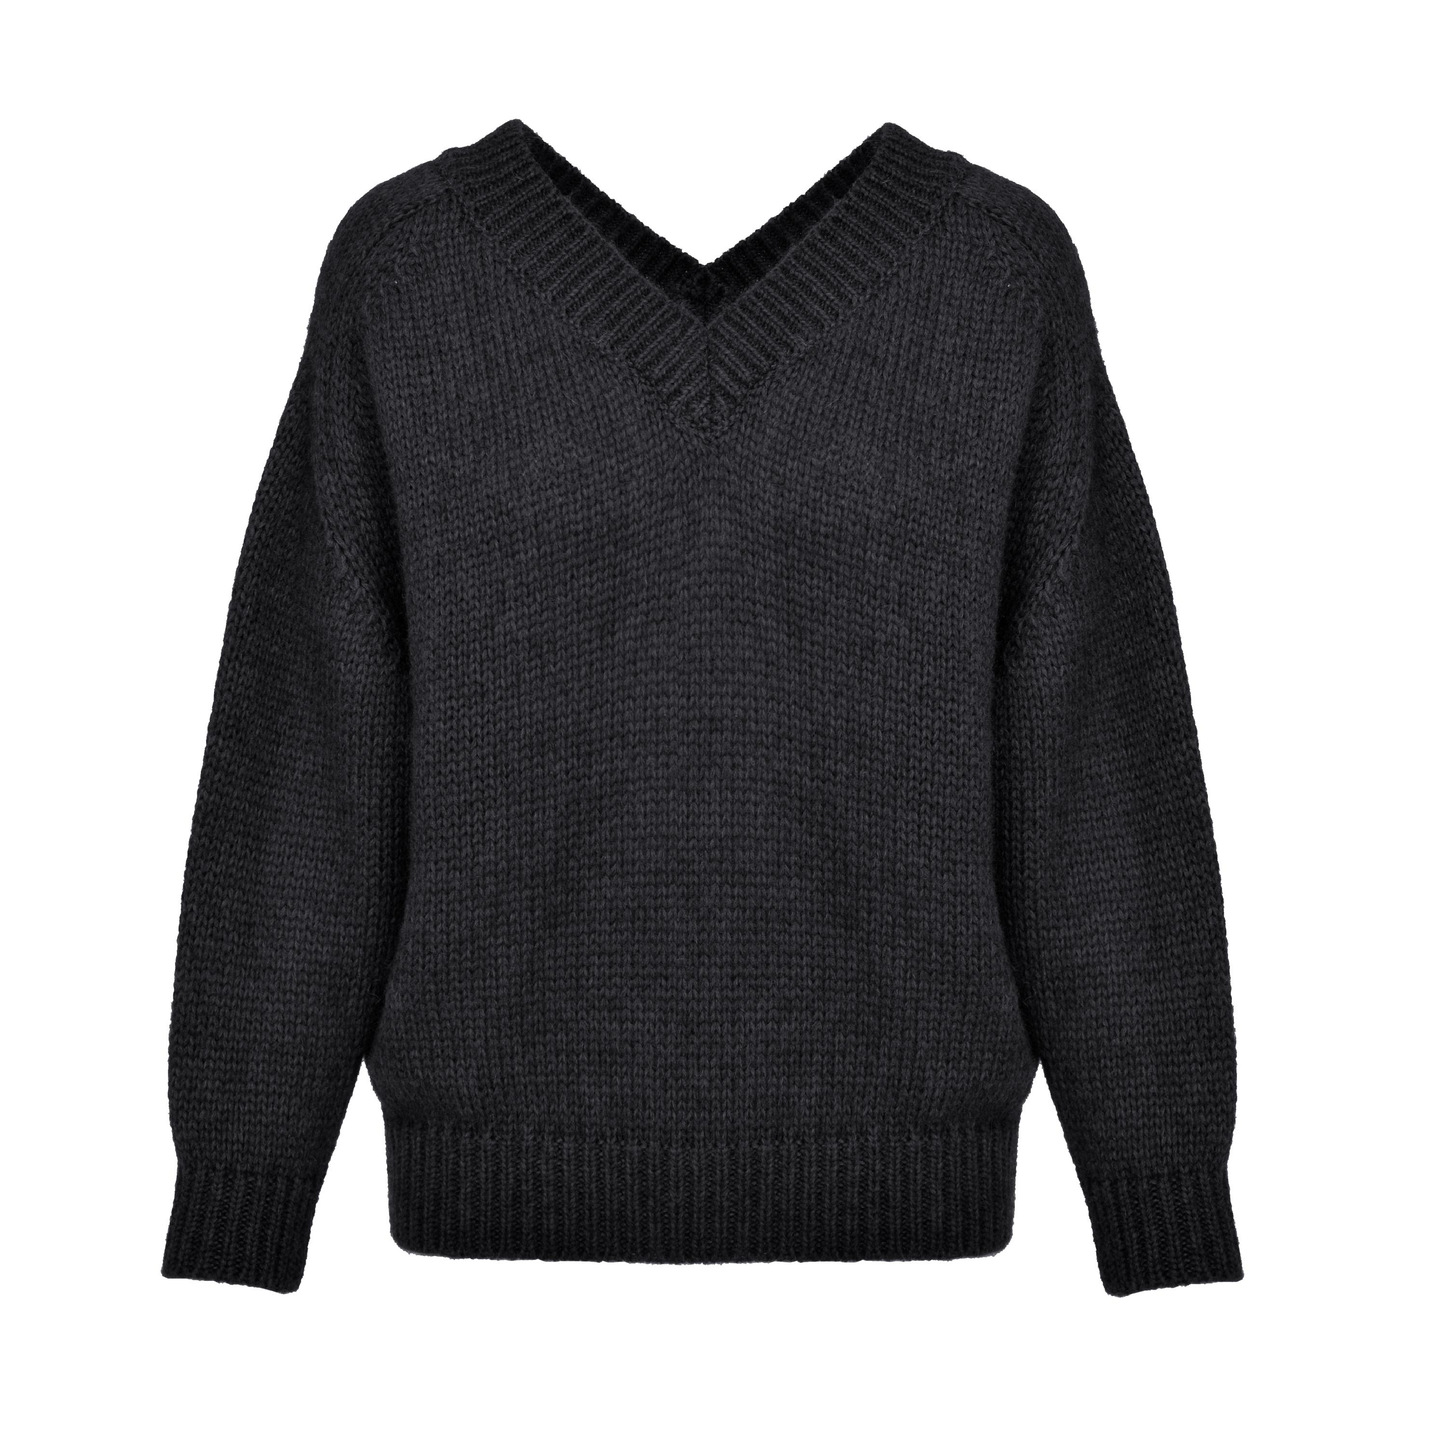 Omar Black sweater